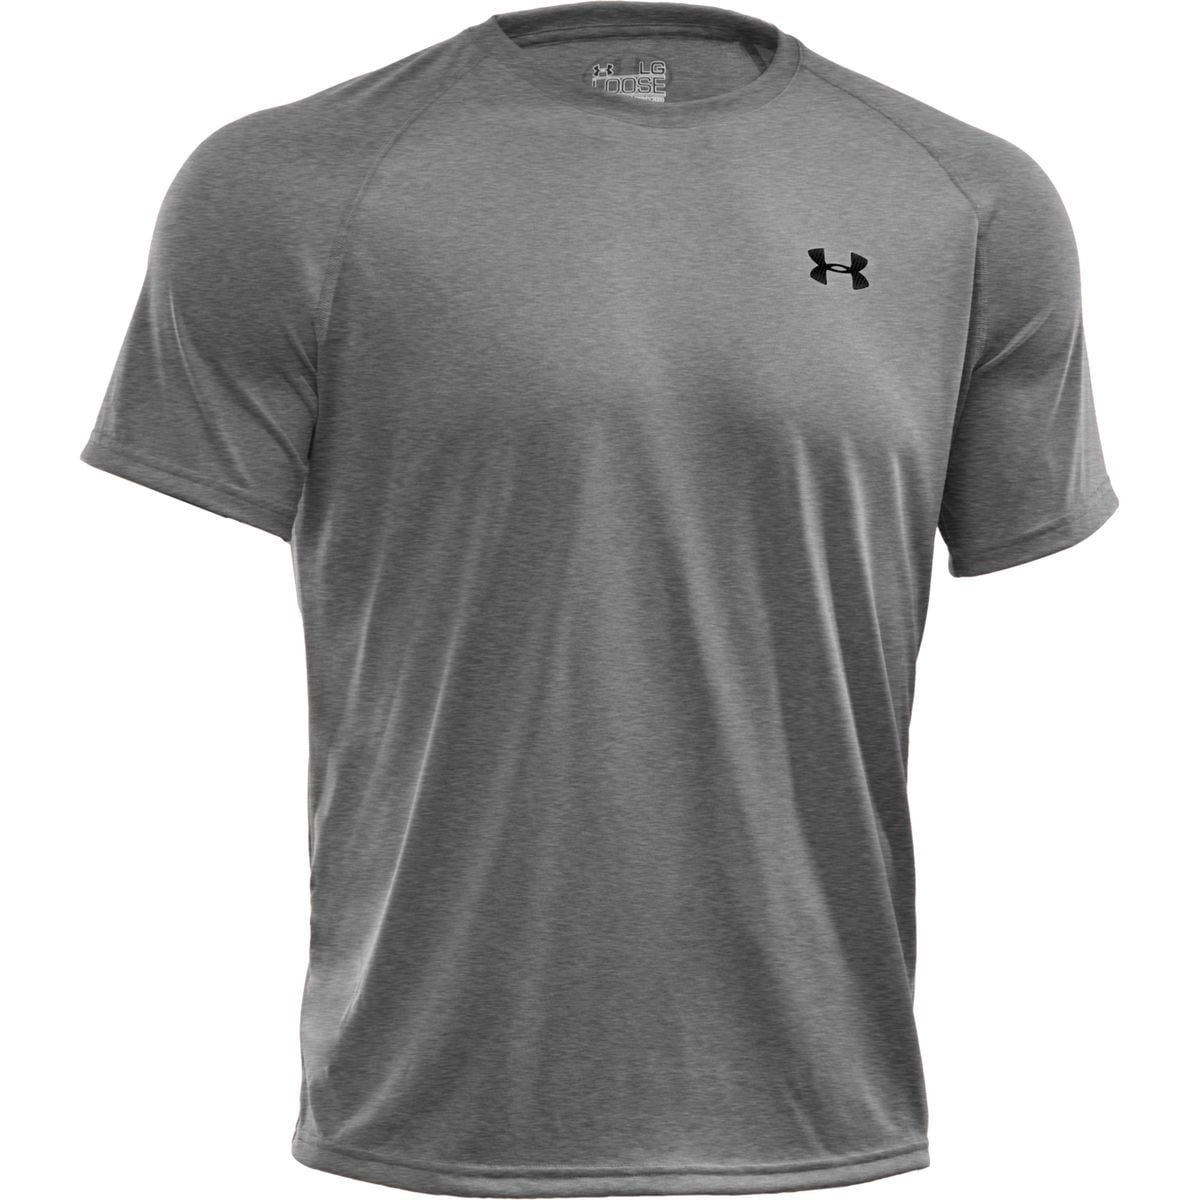 1228539 Men's Heather Gray Tech S/S T-Shirt - Size 3X-Large - Walmart.com